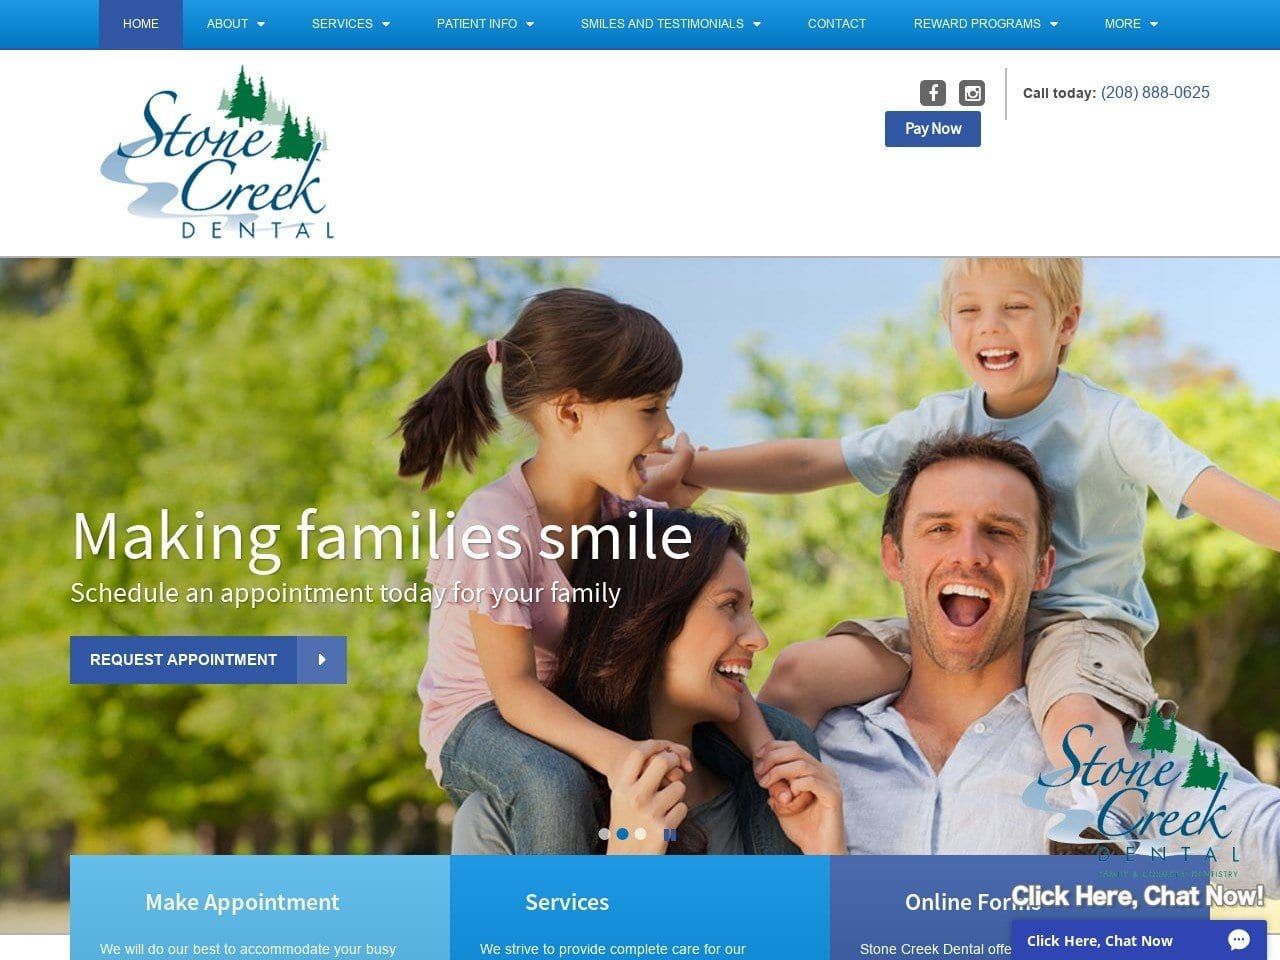 Stone Creek Dental Website Screenshot from scdsmiles.com